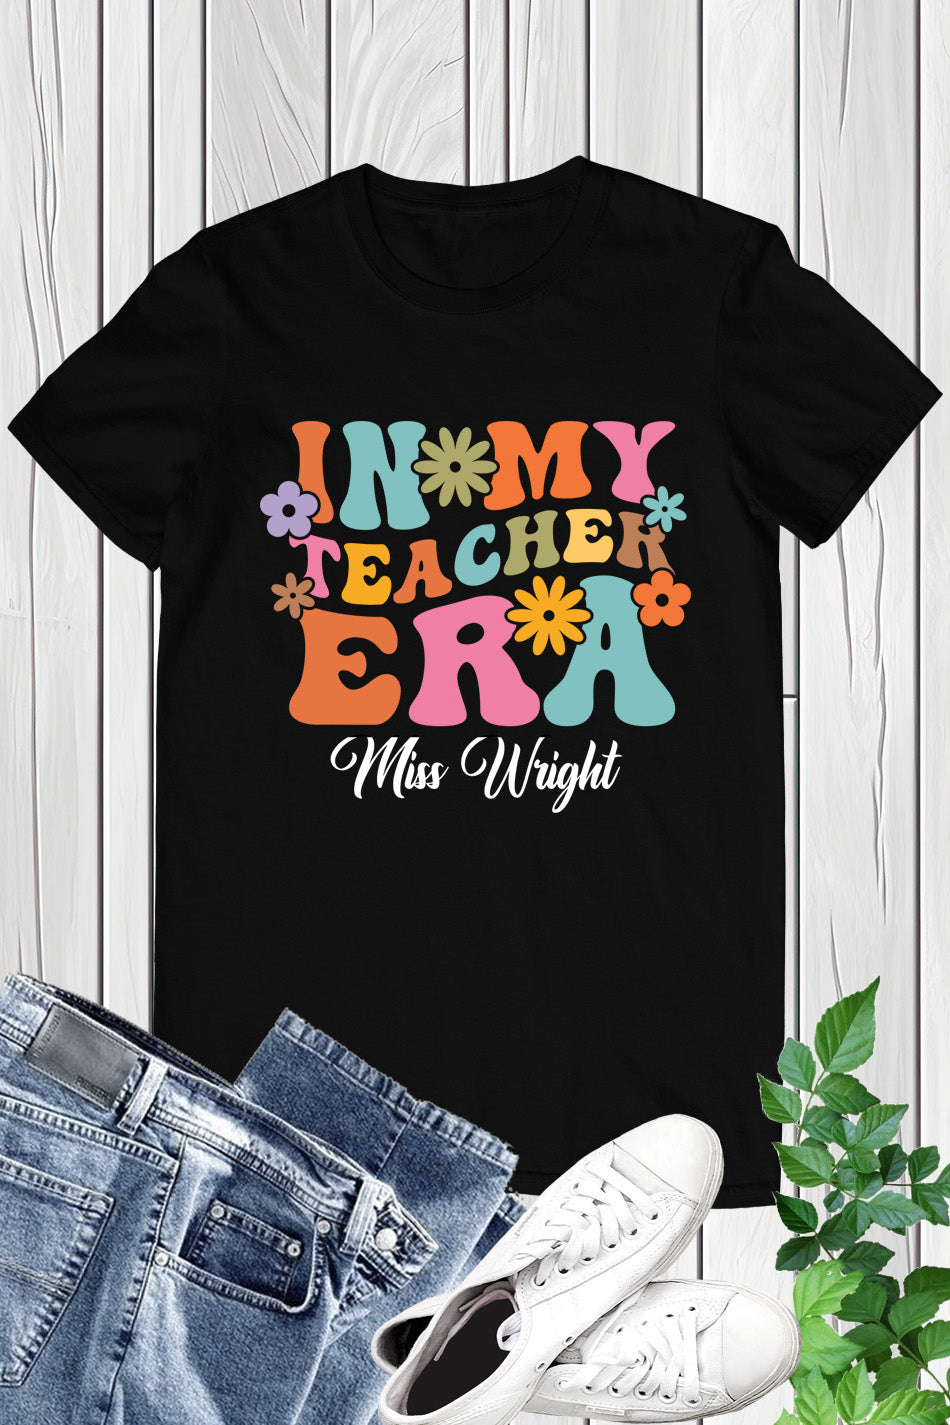 In My Teacher Era Custom Shirts